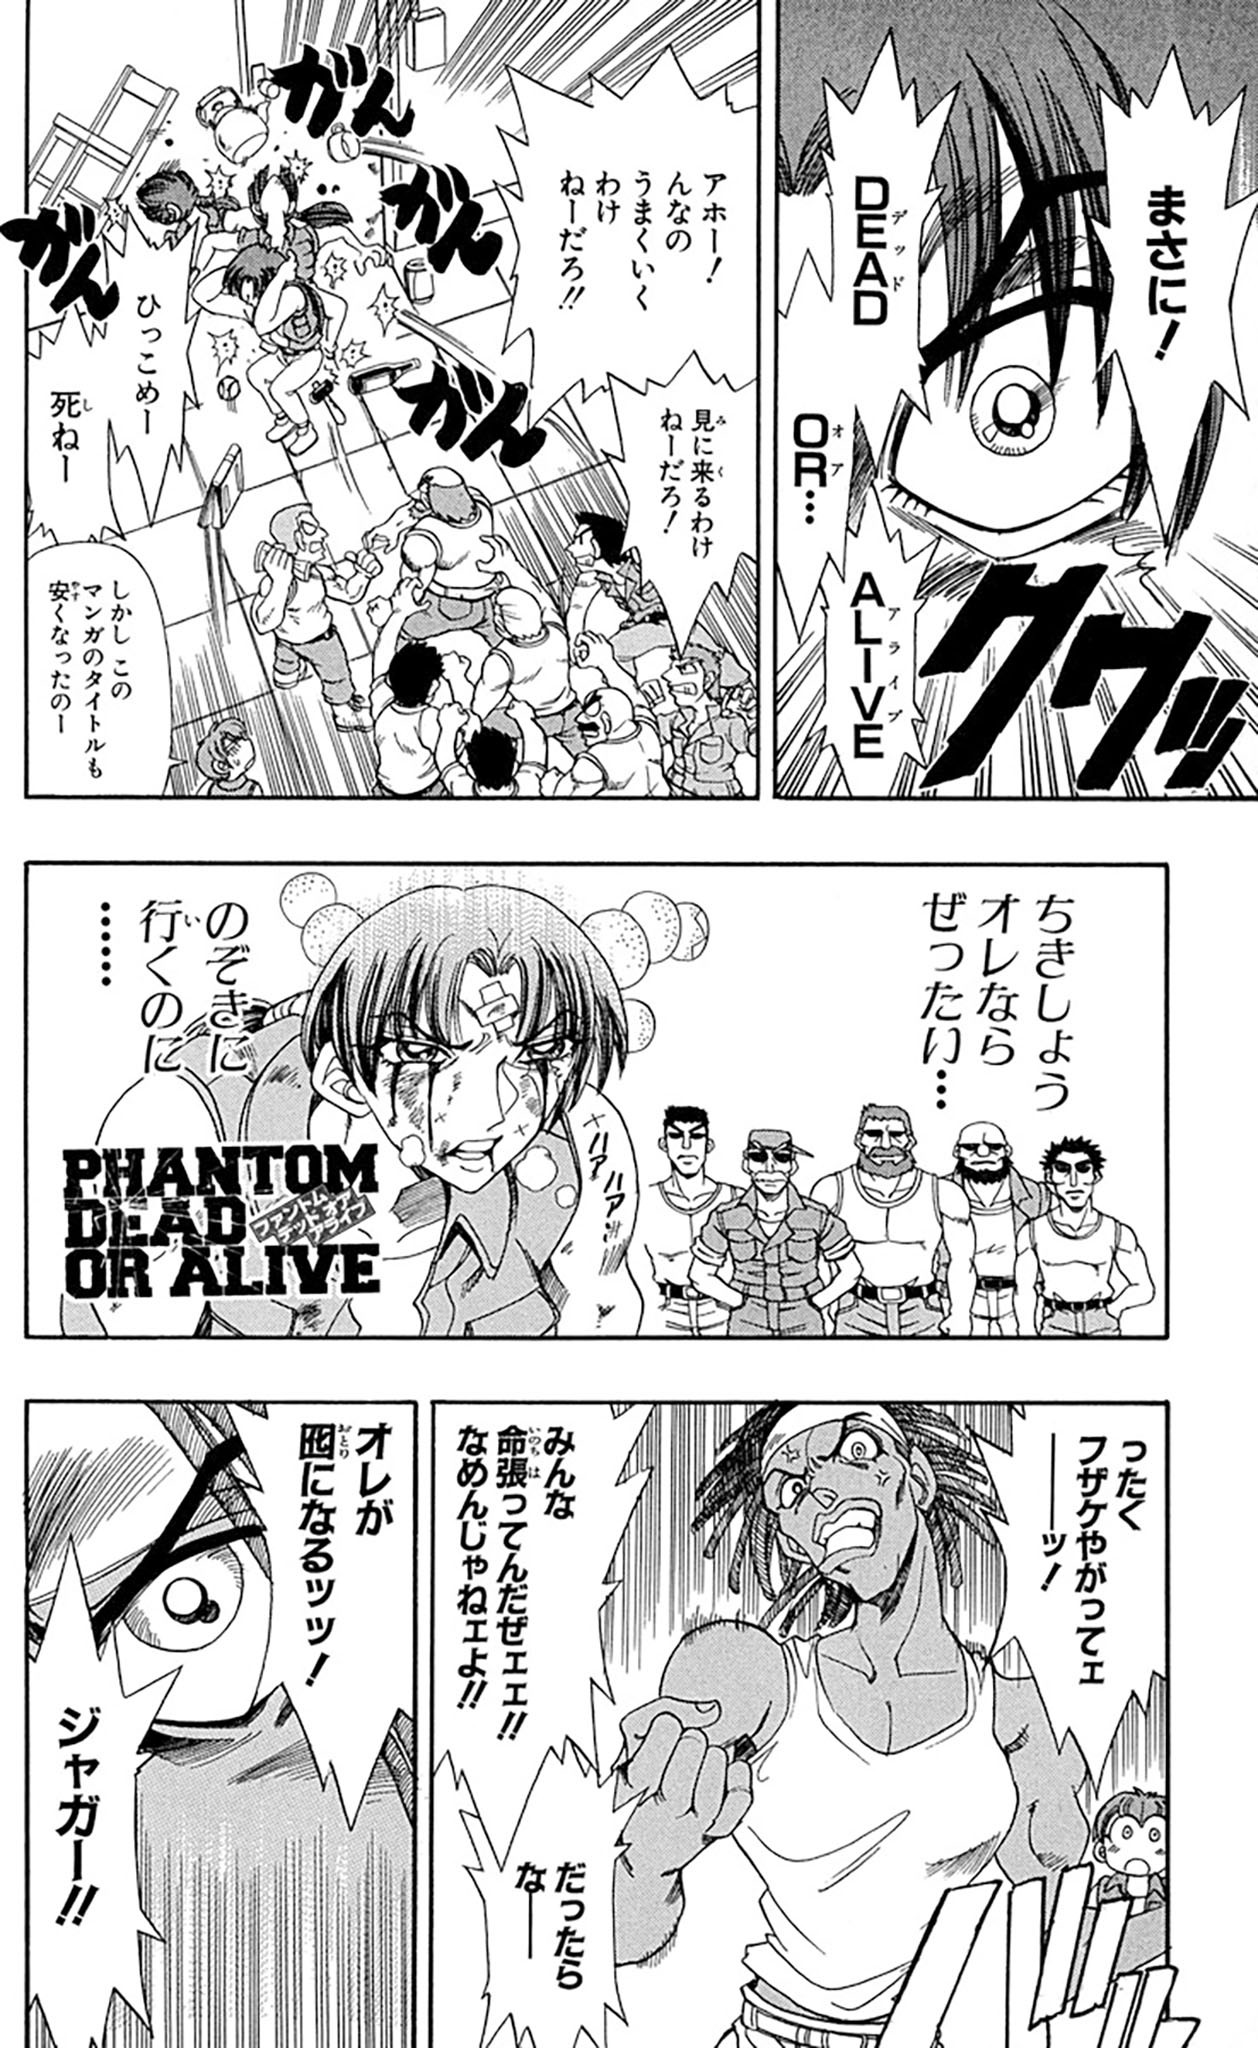 Phantom Dead Or Alive 5巻 Amebaマンガ 旧 読書のお時間です